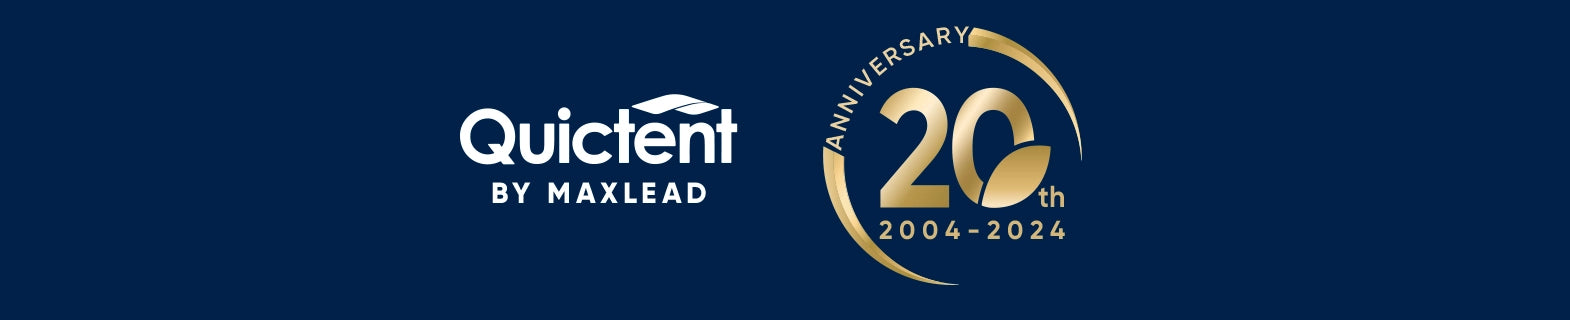 quictent_Maxlead_20th_anniversary_banner